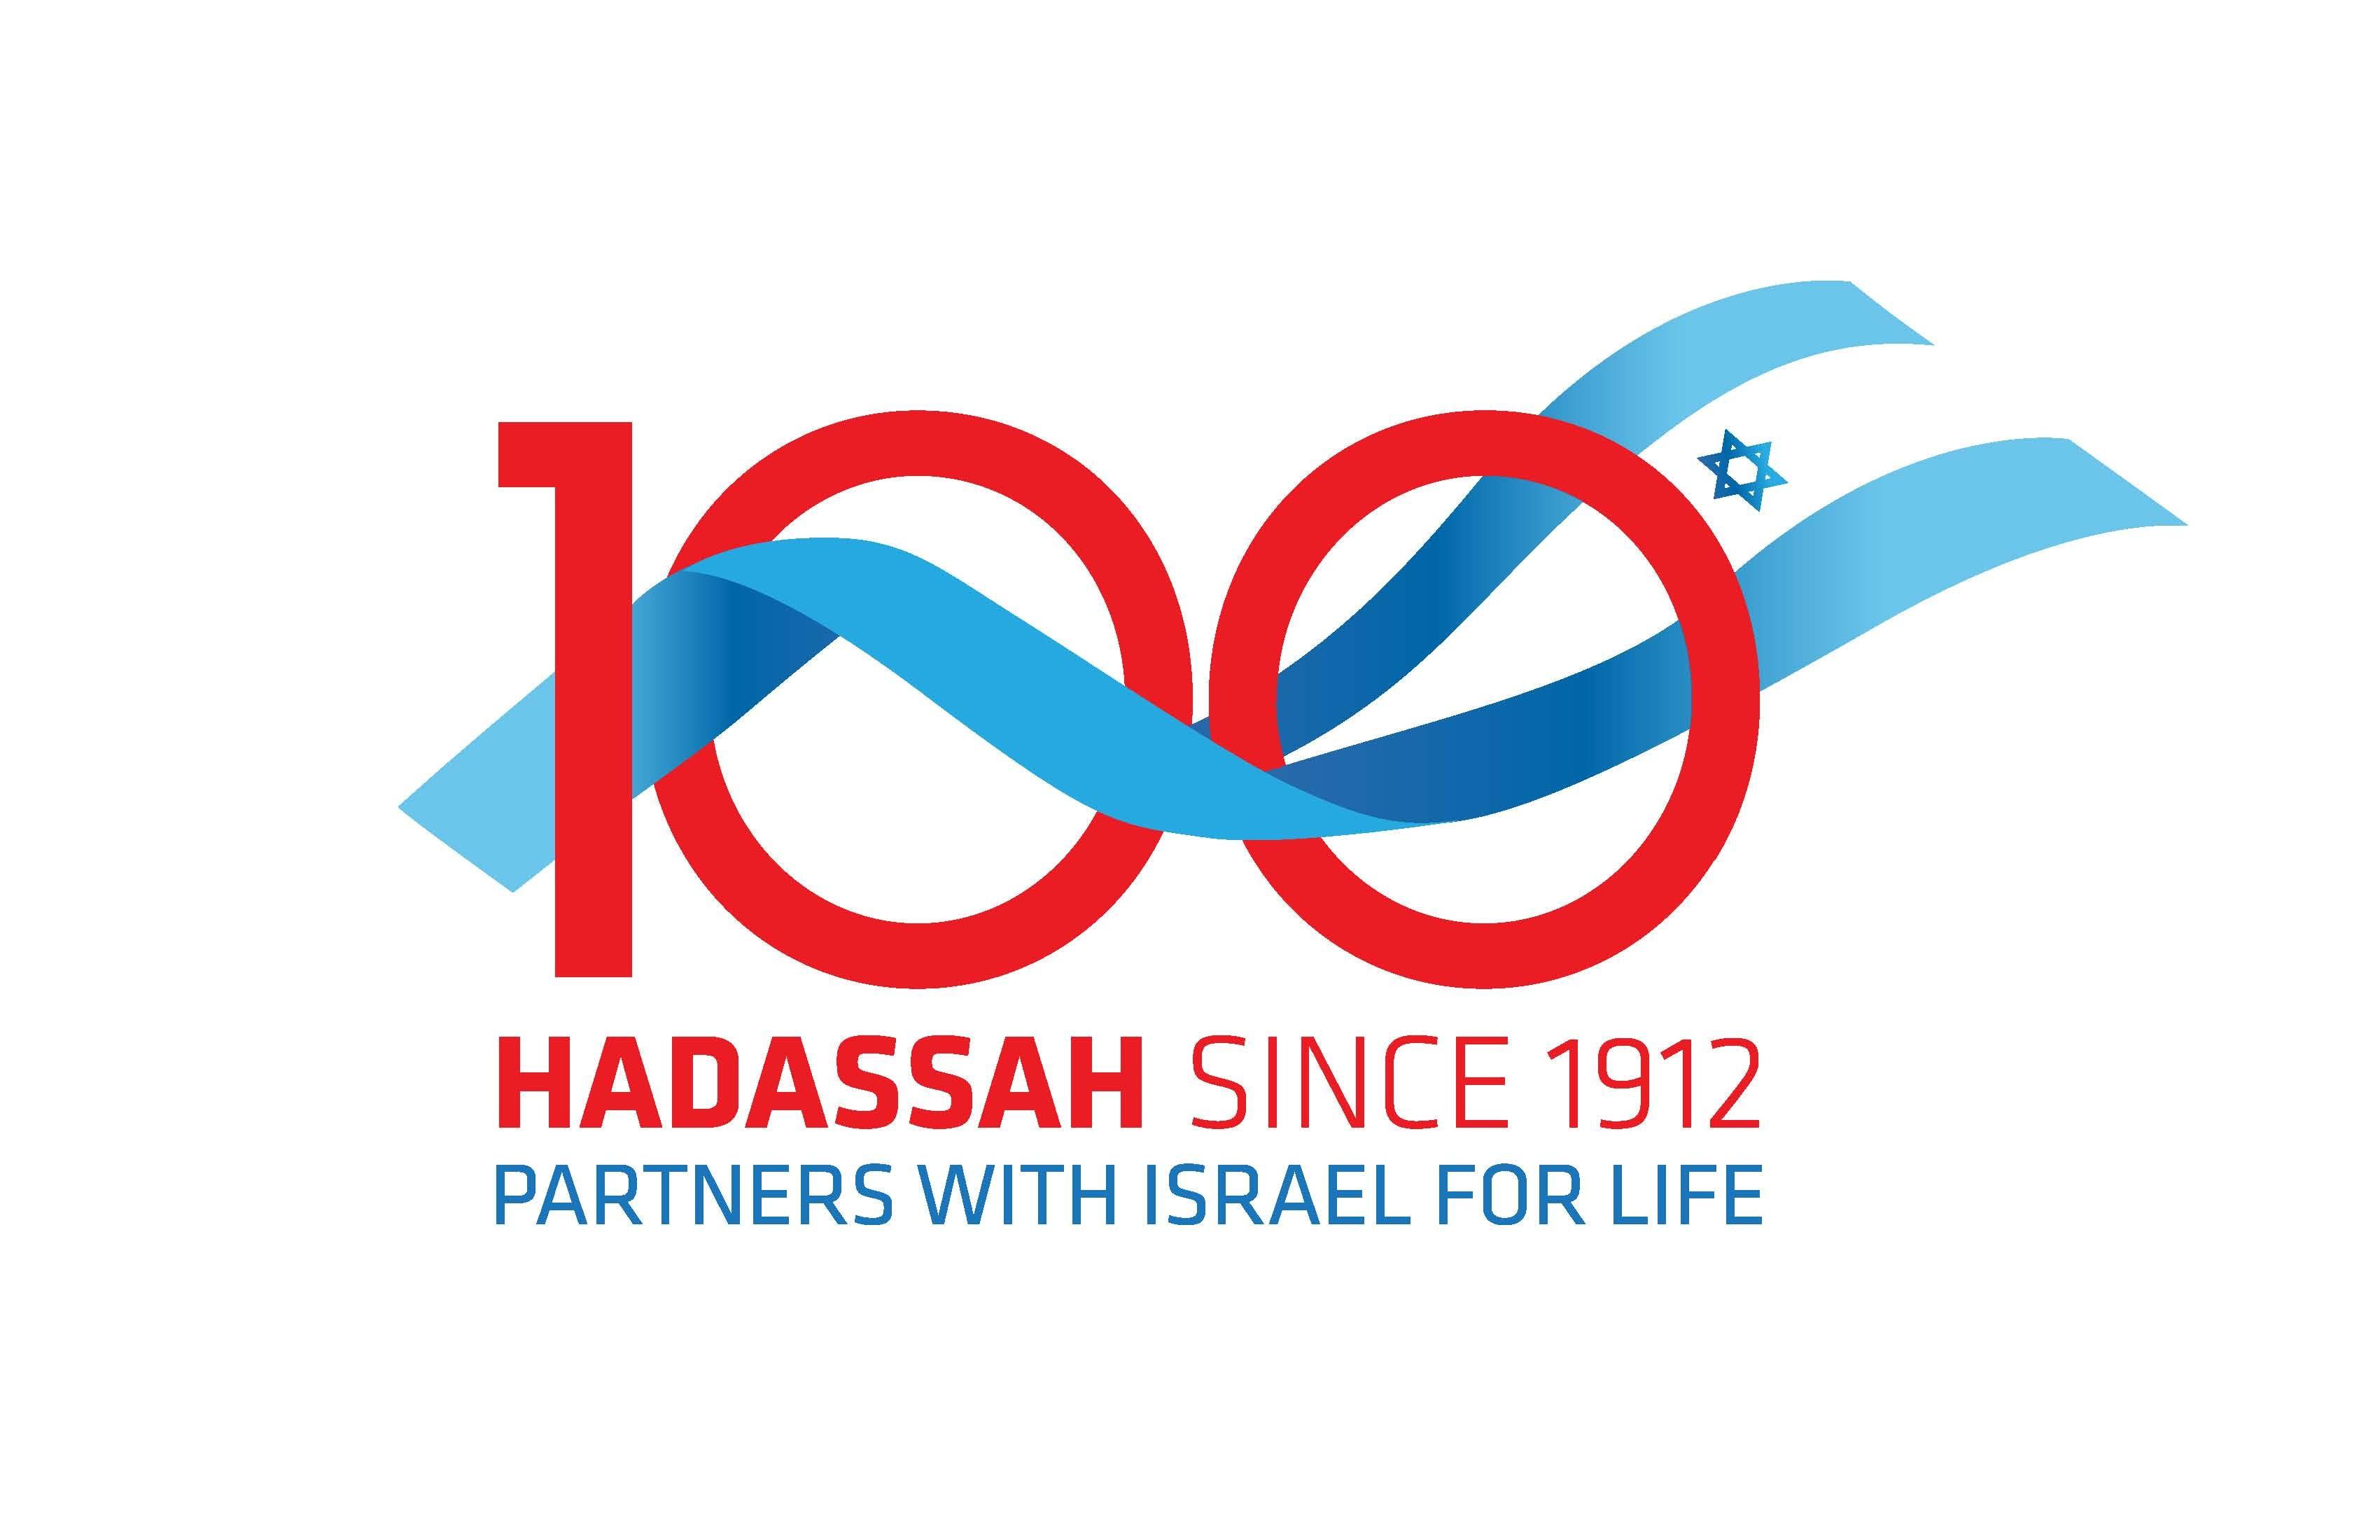 Hadassah Logo - Hadassah Centennial (USA) | Anniversary Logos | Anniversary logo ...